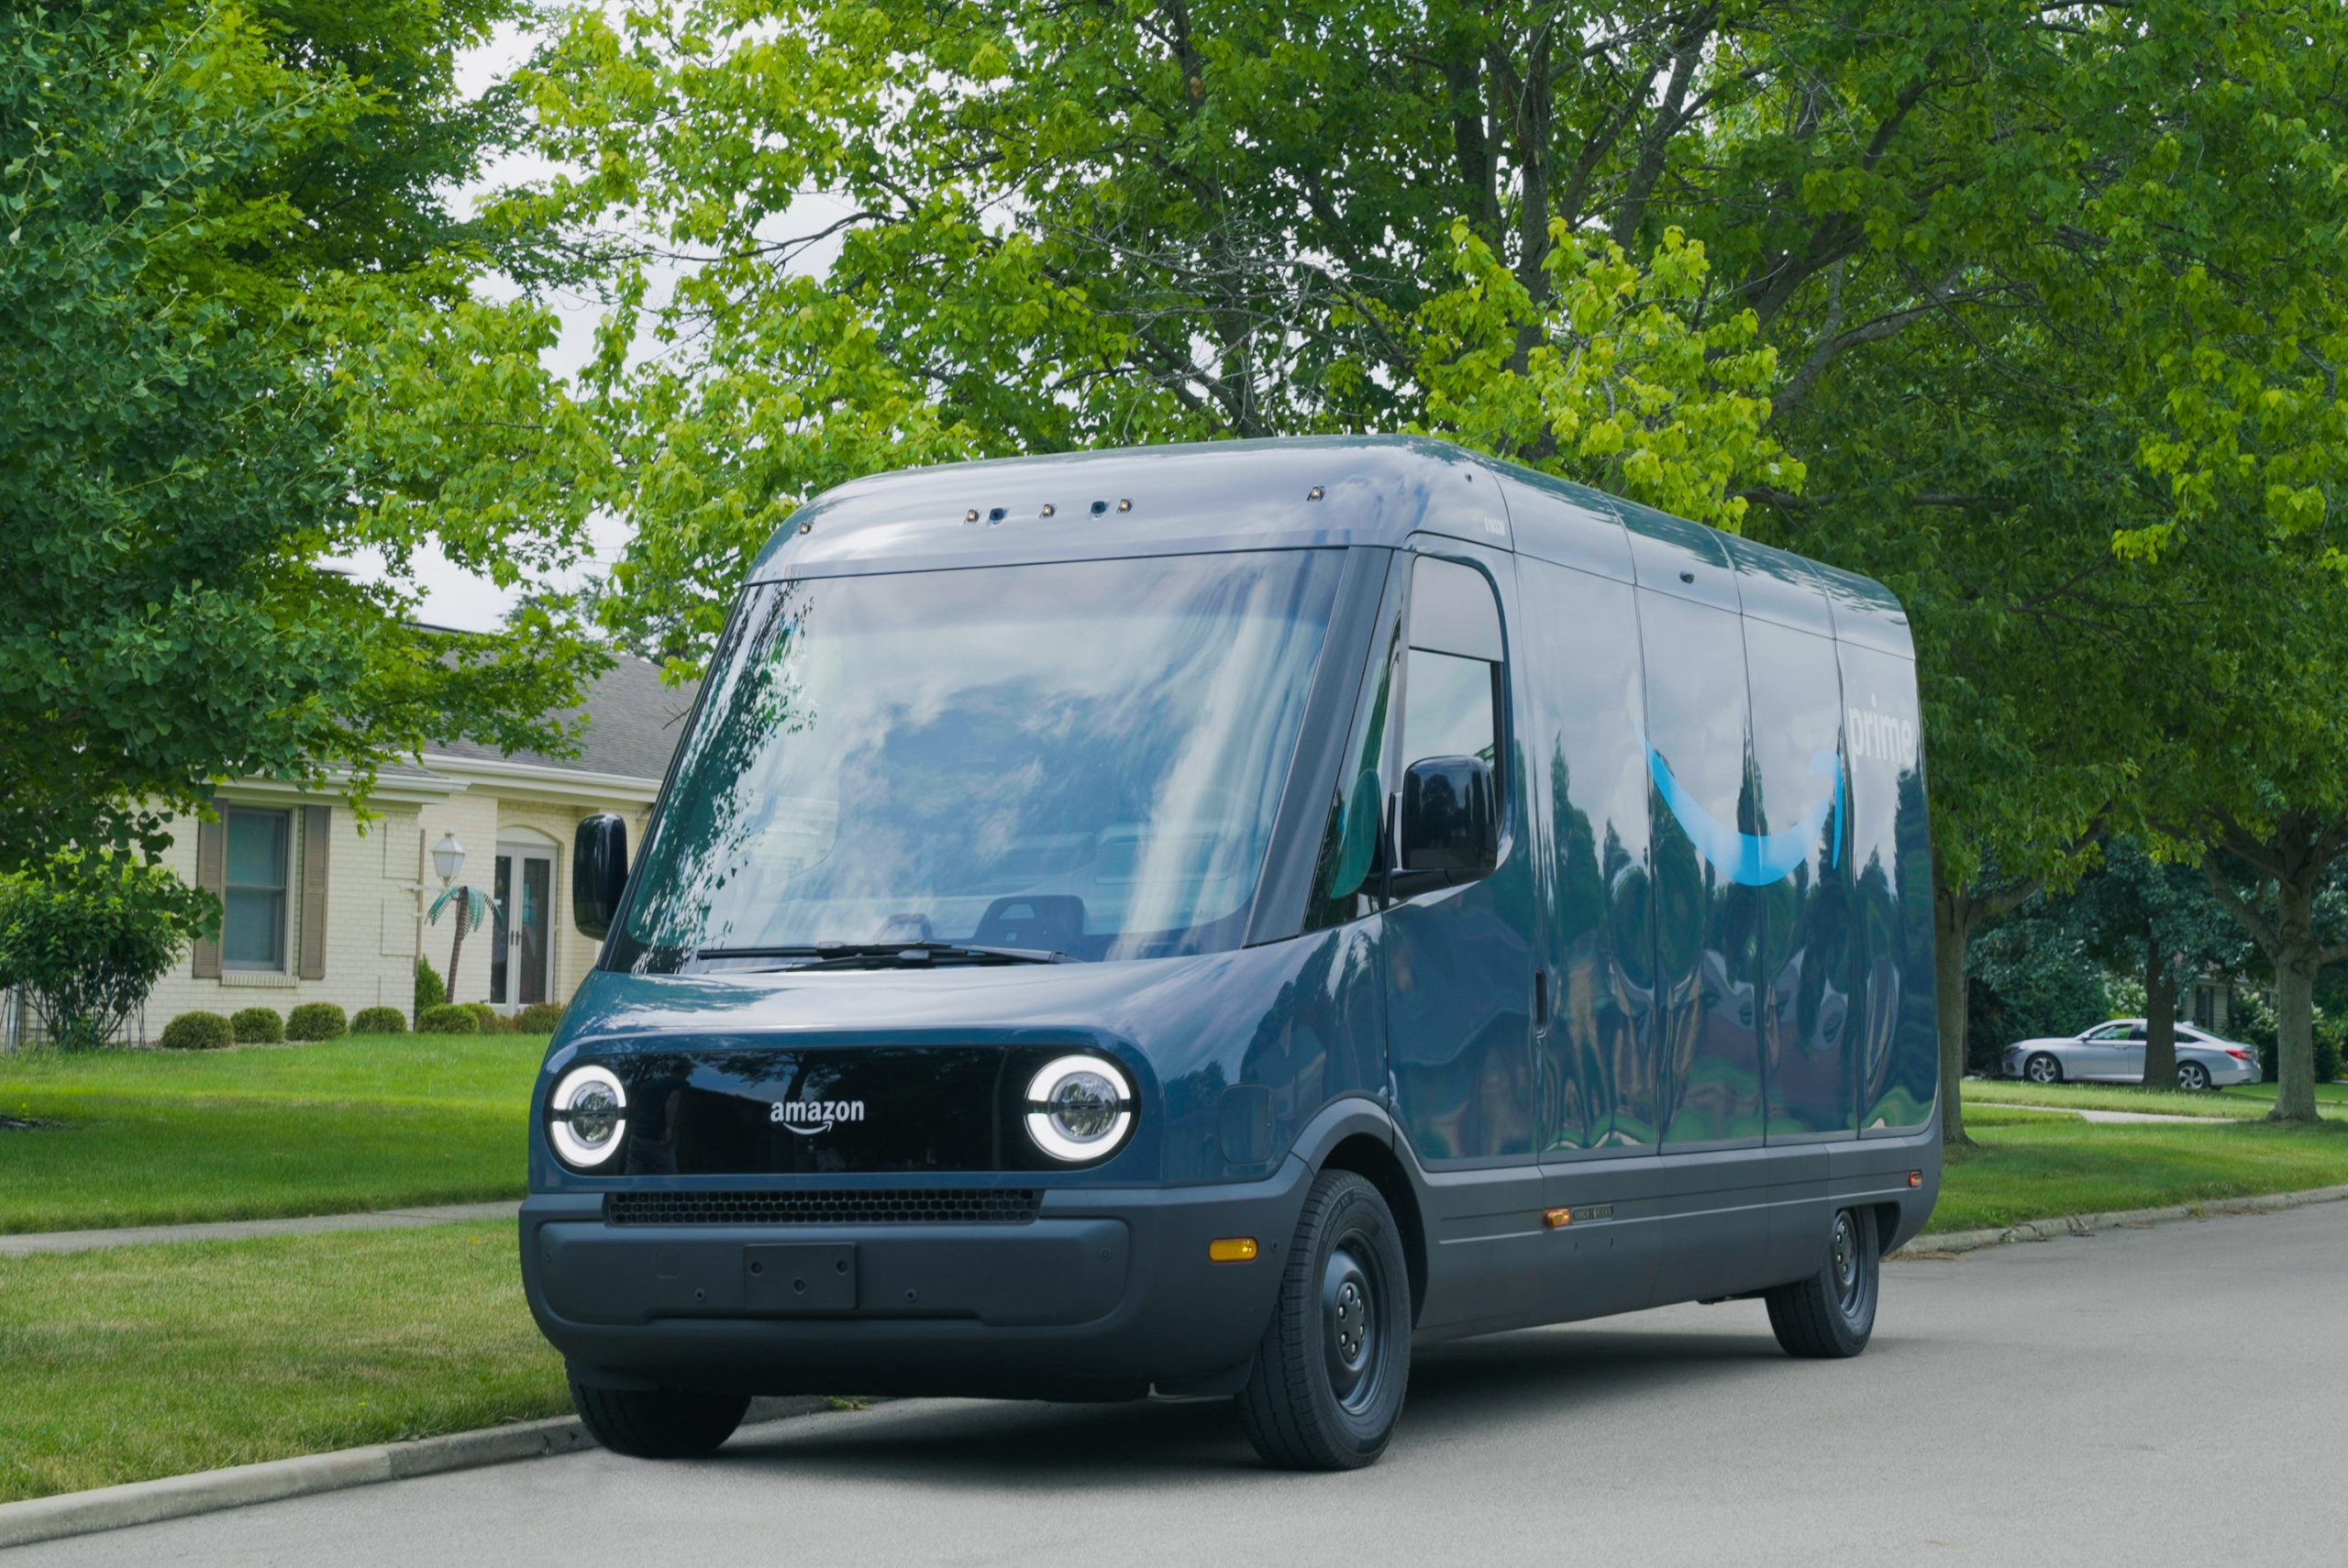 A Rivian electric van for Amazon.